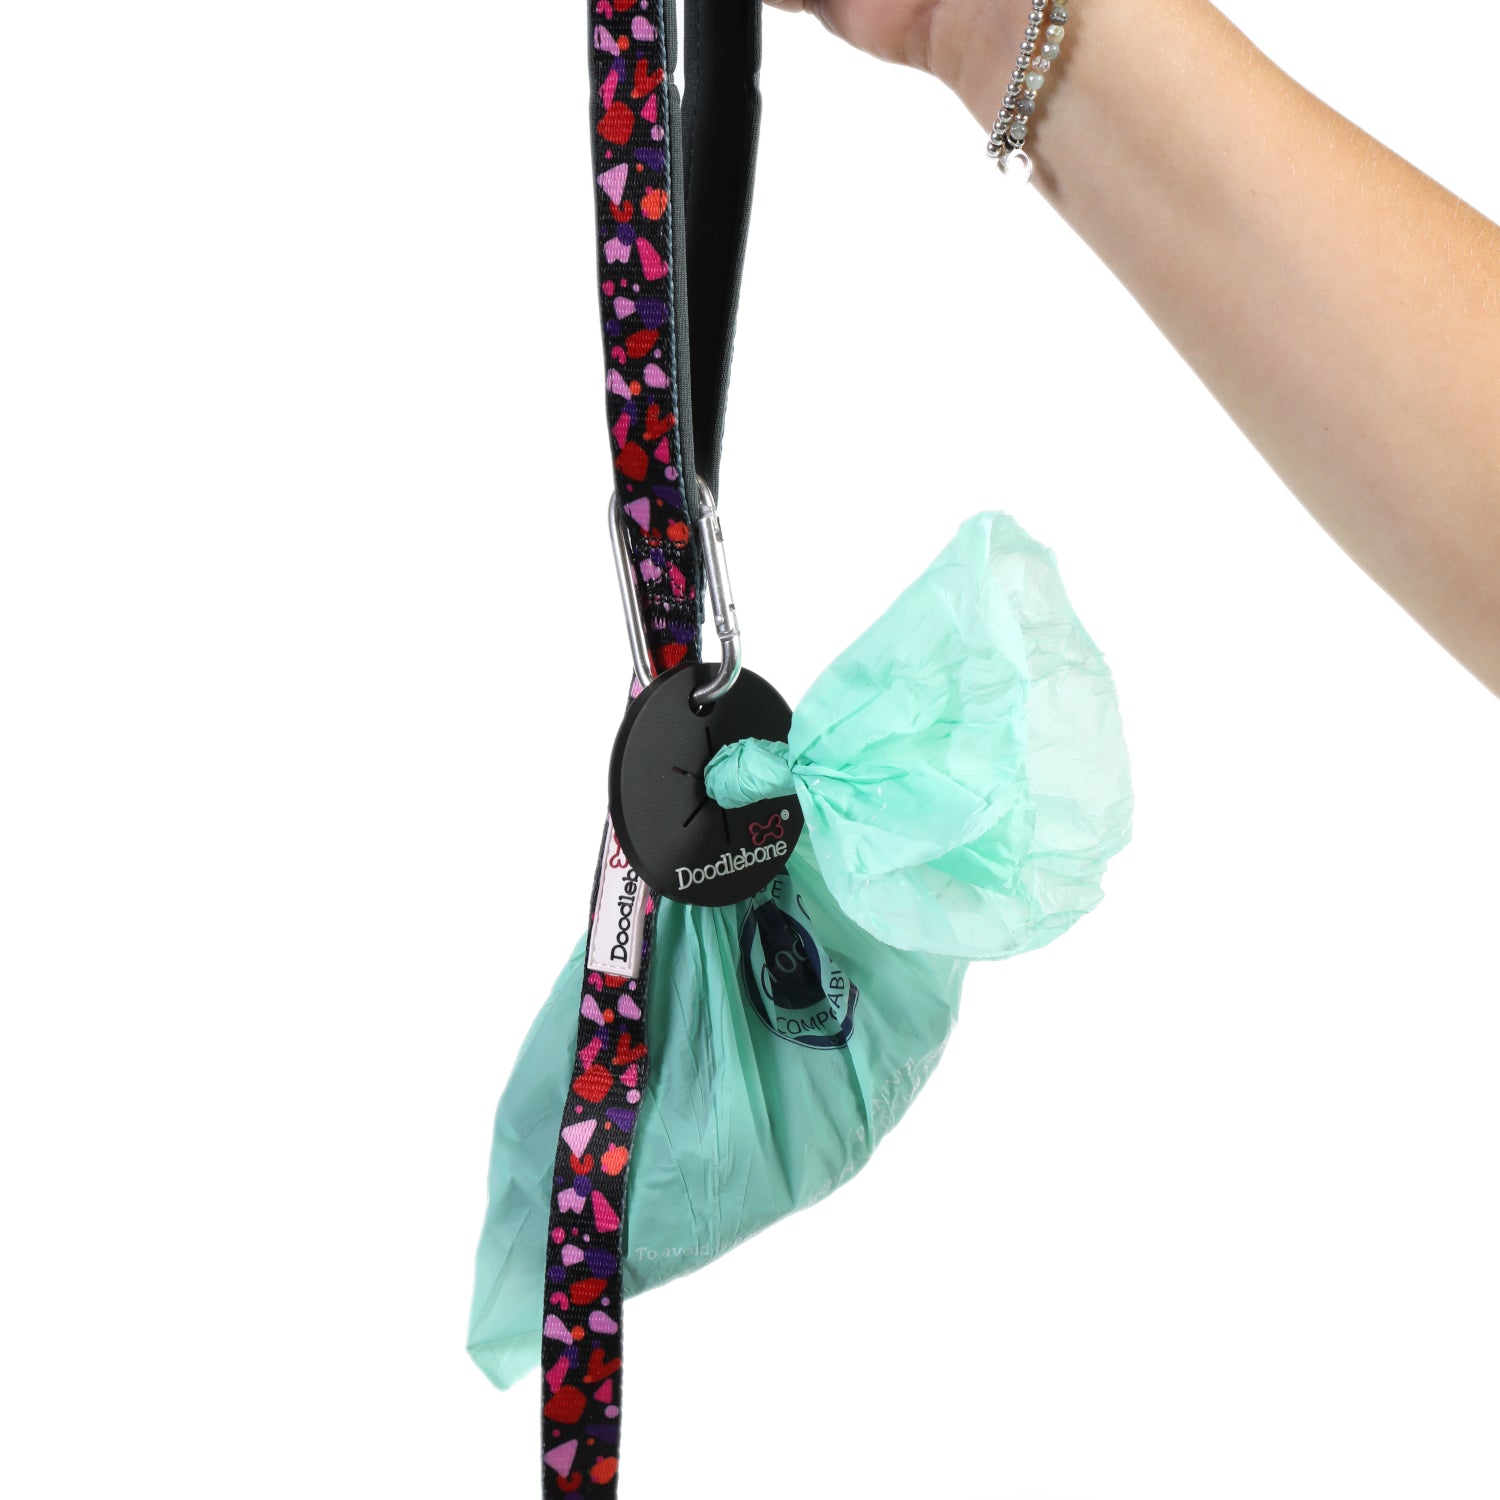 Doodlebone PICK ‘N’ CLIP Used Poop Bag Holder